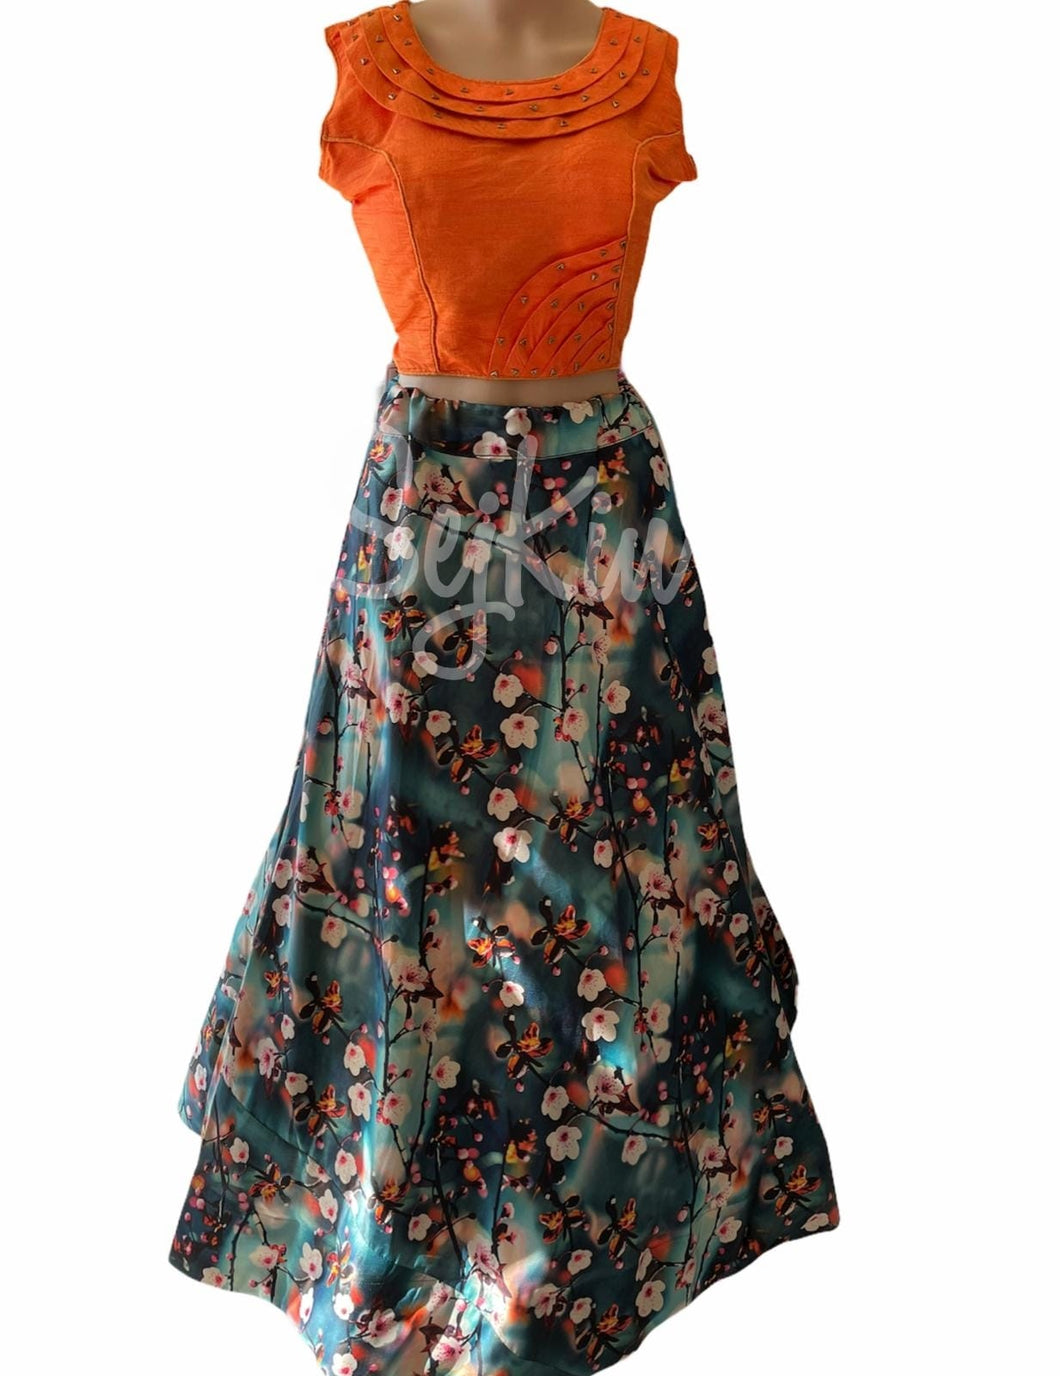 Autumnal skirt and orange top